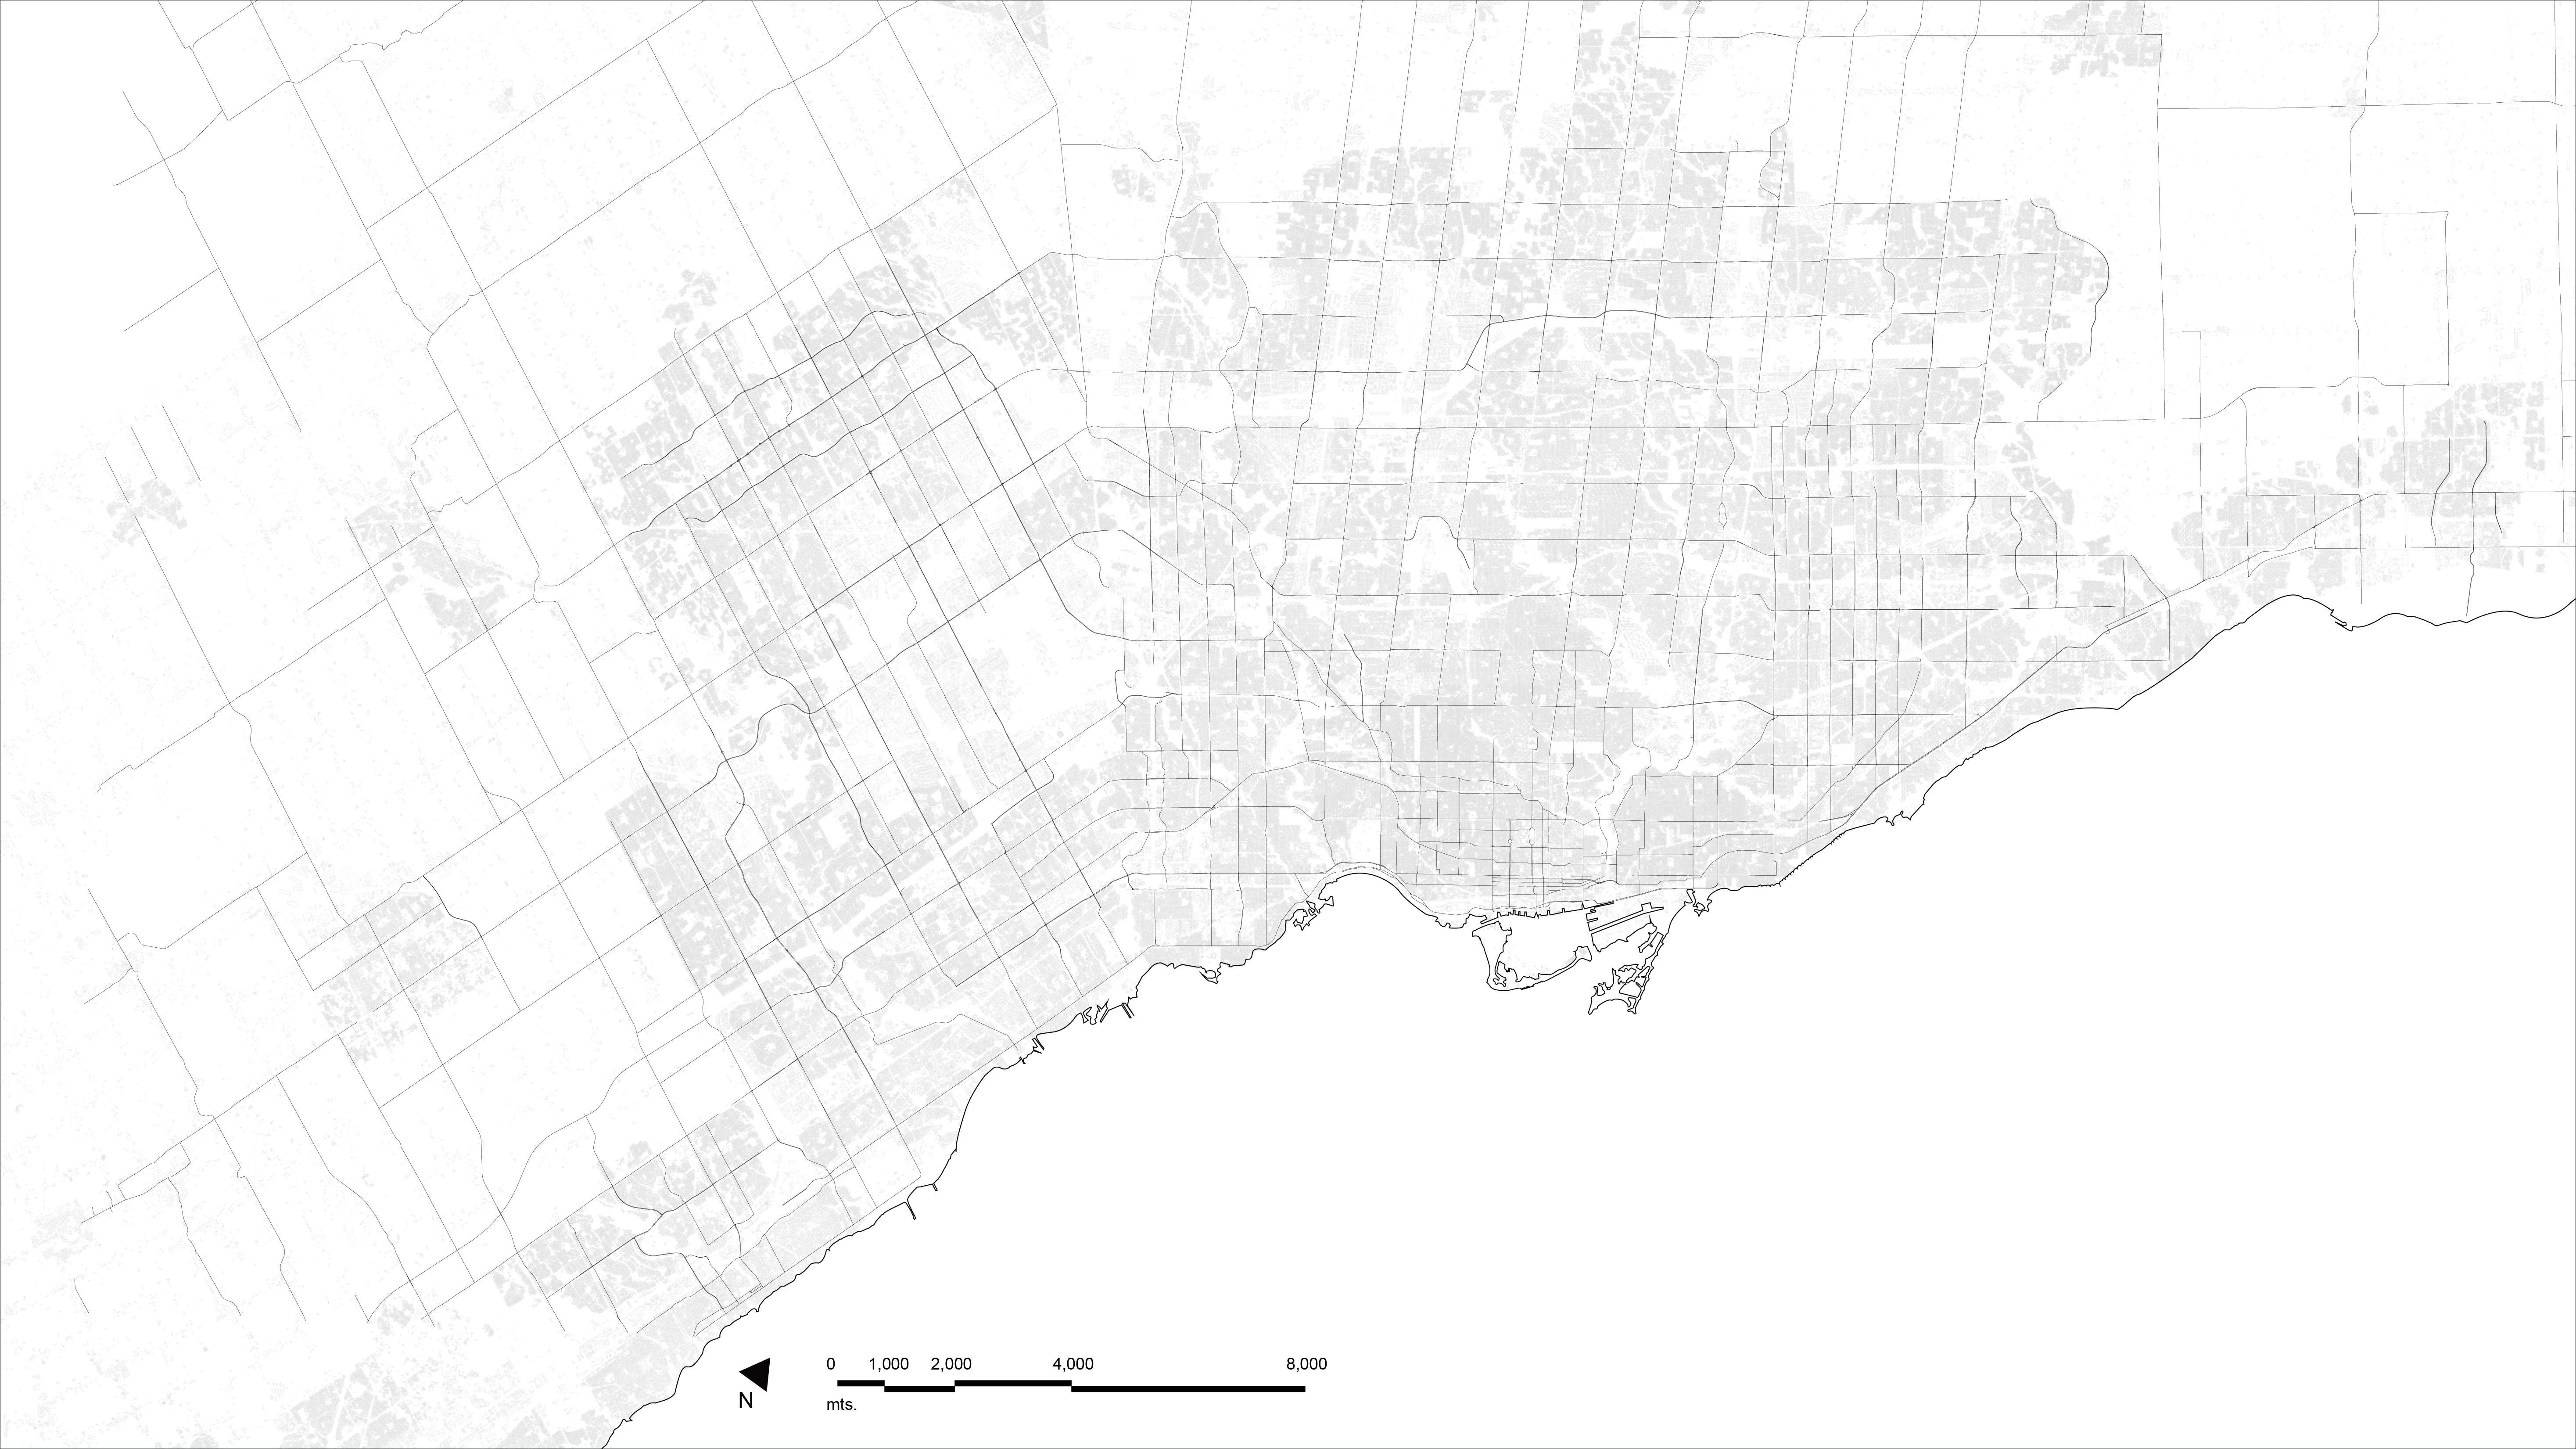 Image of a base map